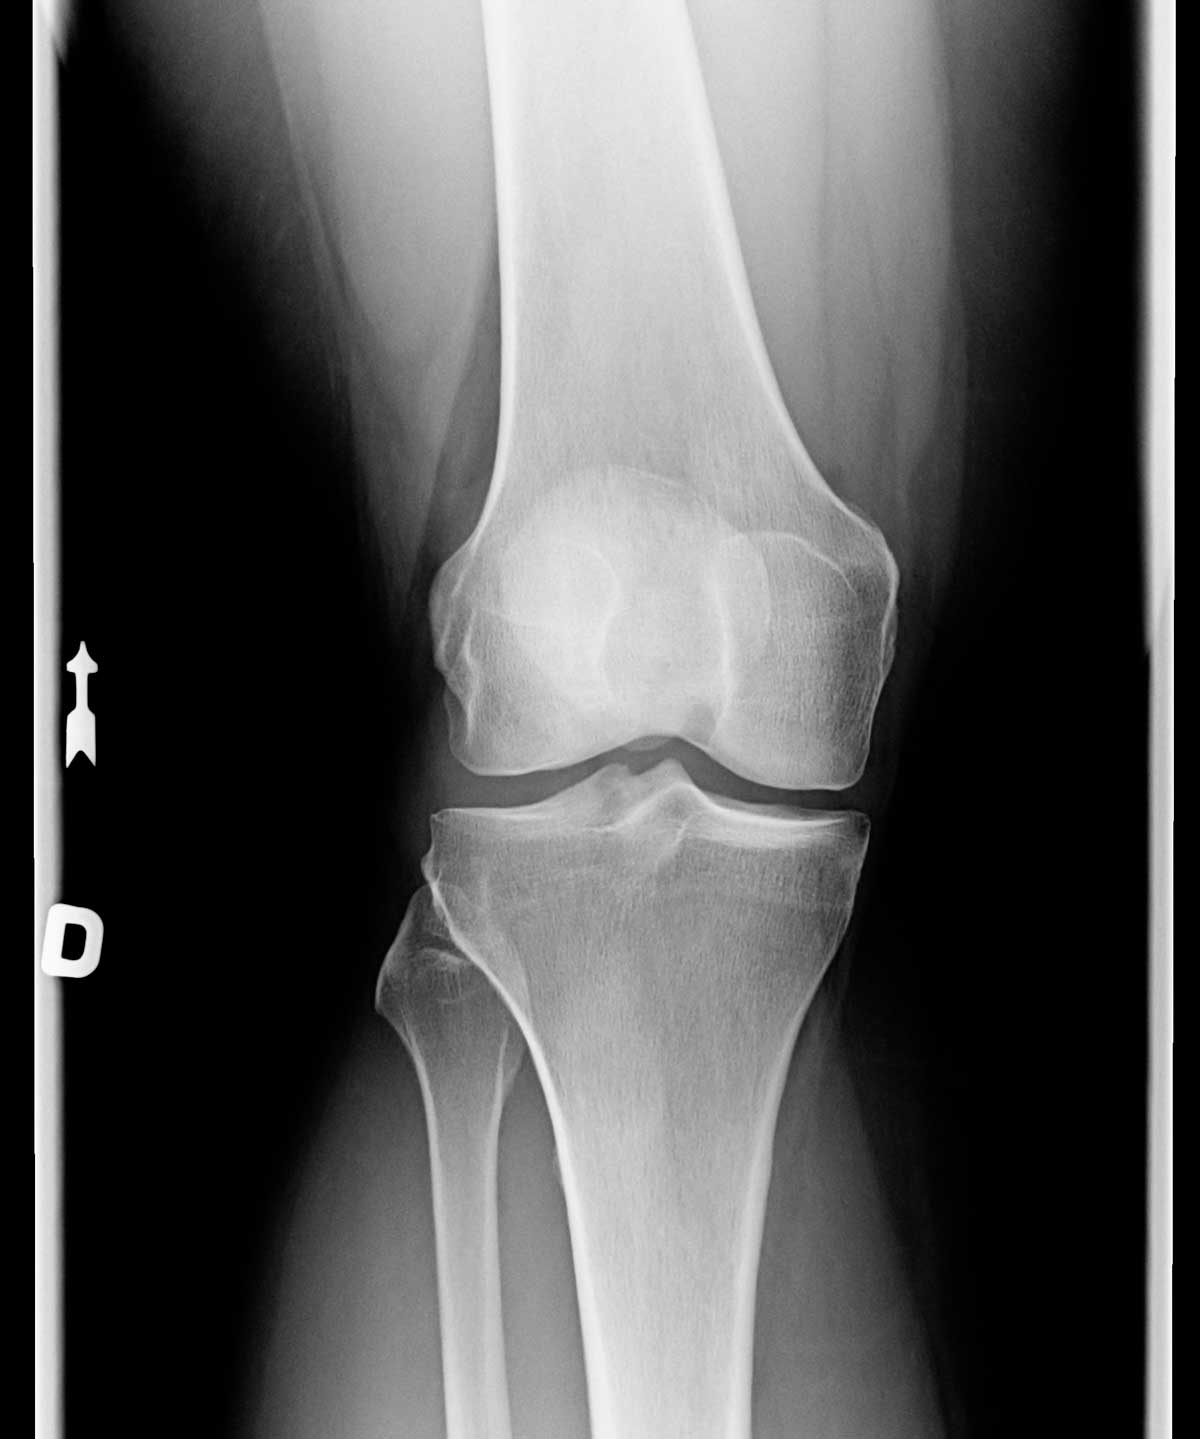 Infezioni protesi ginocchio